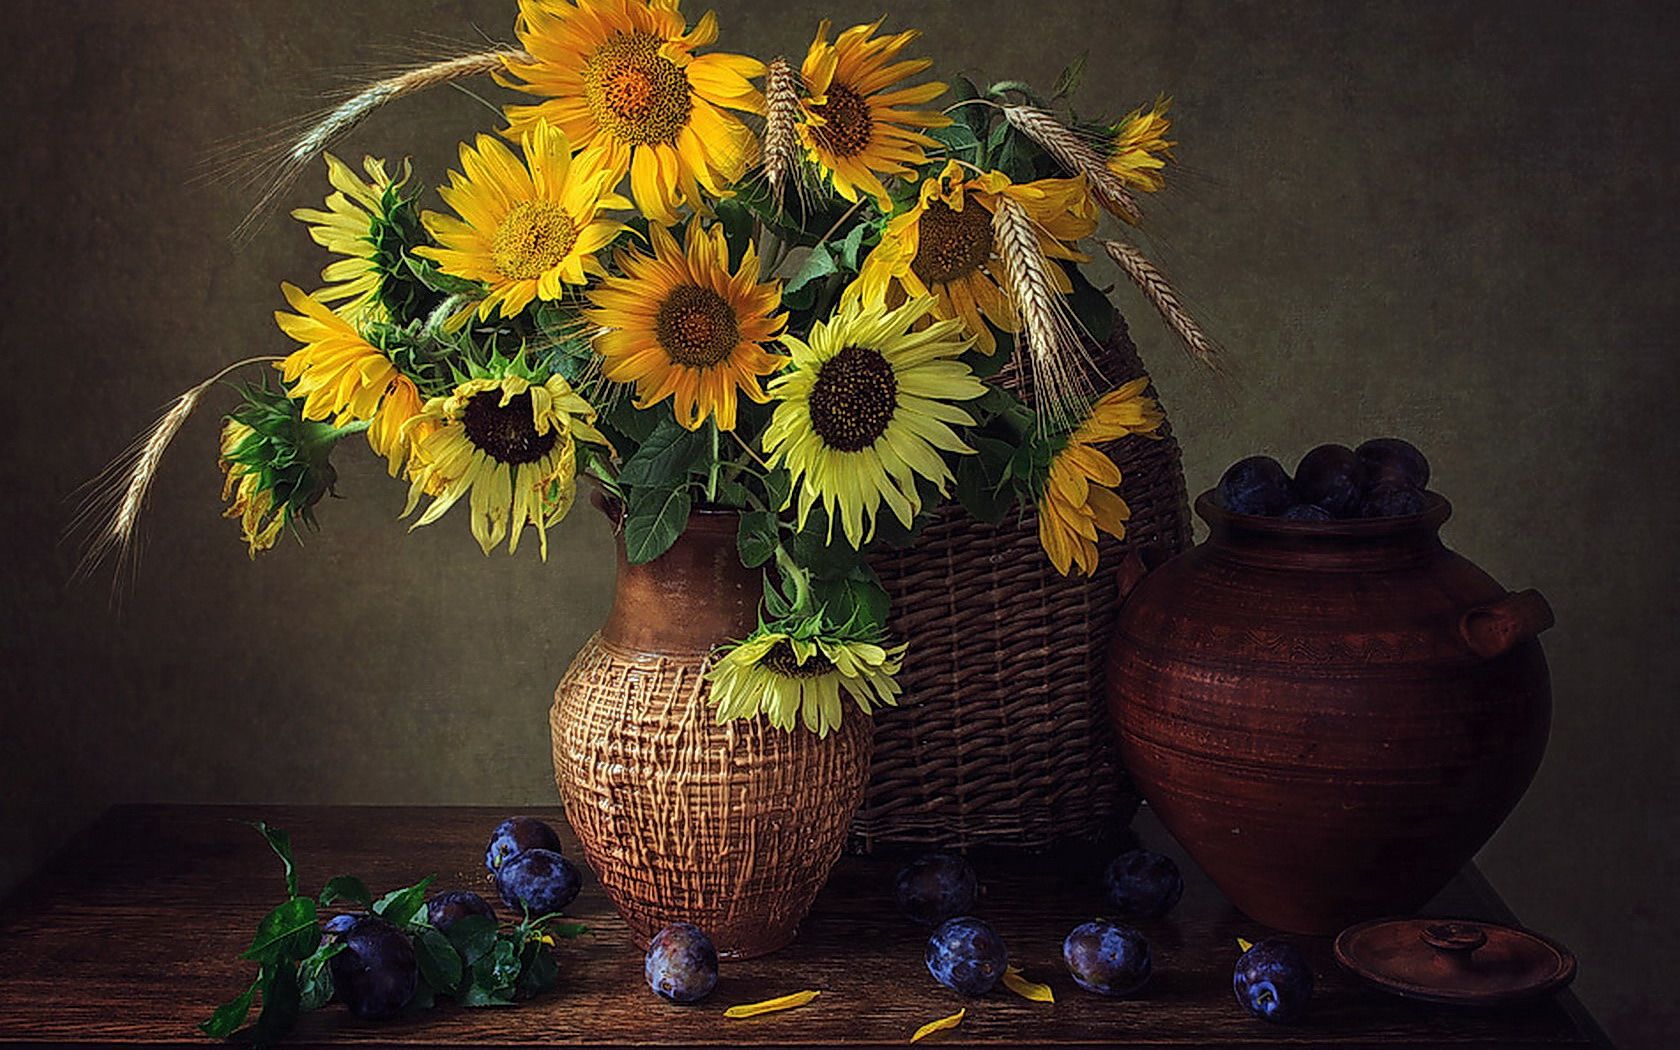 photography, still life, flower, grapes, sunflower, wicker